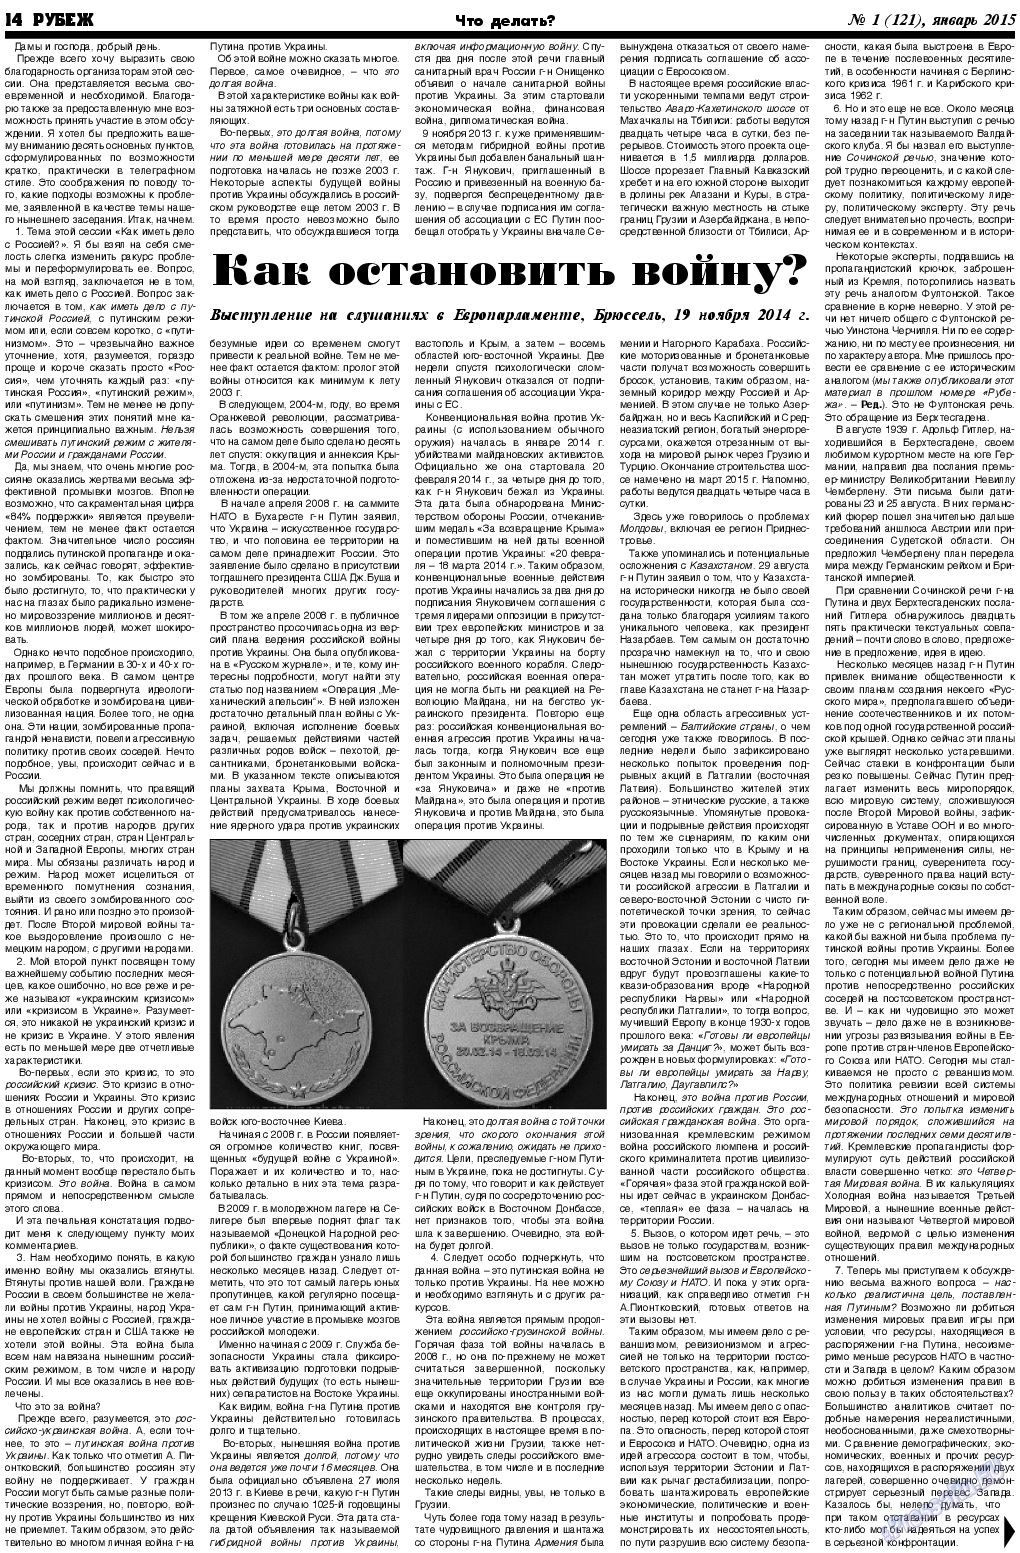 Рубеж, газета. 2015 №1 стр.14